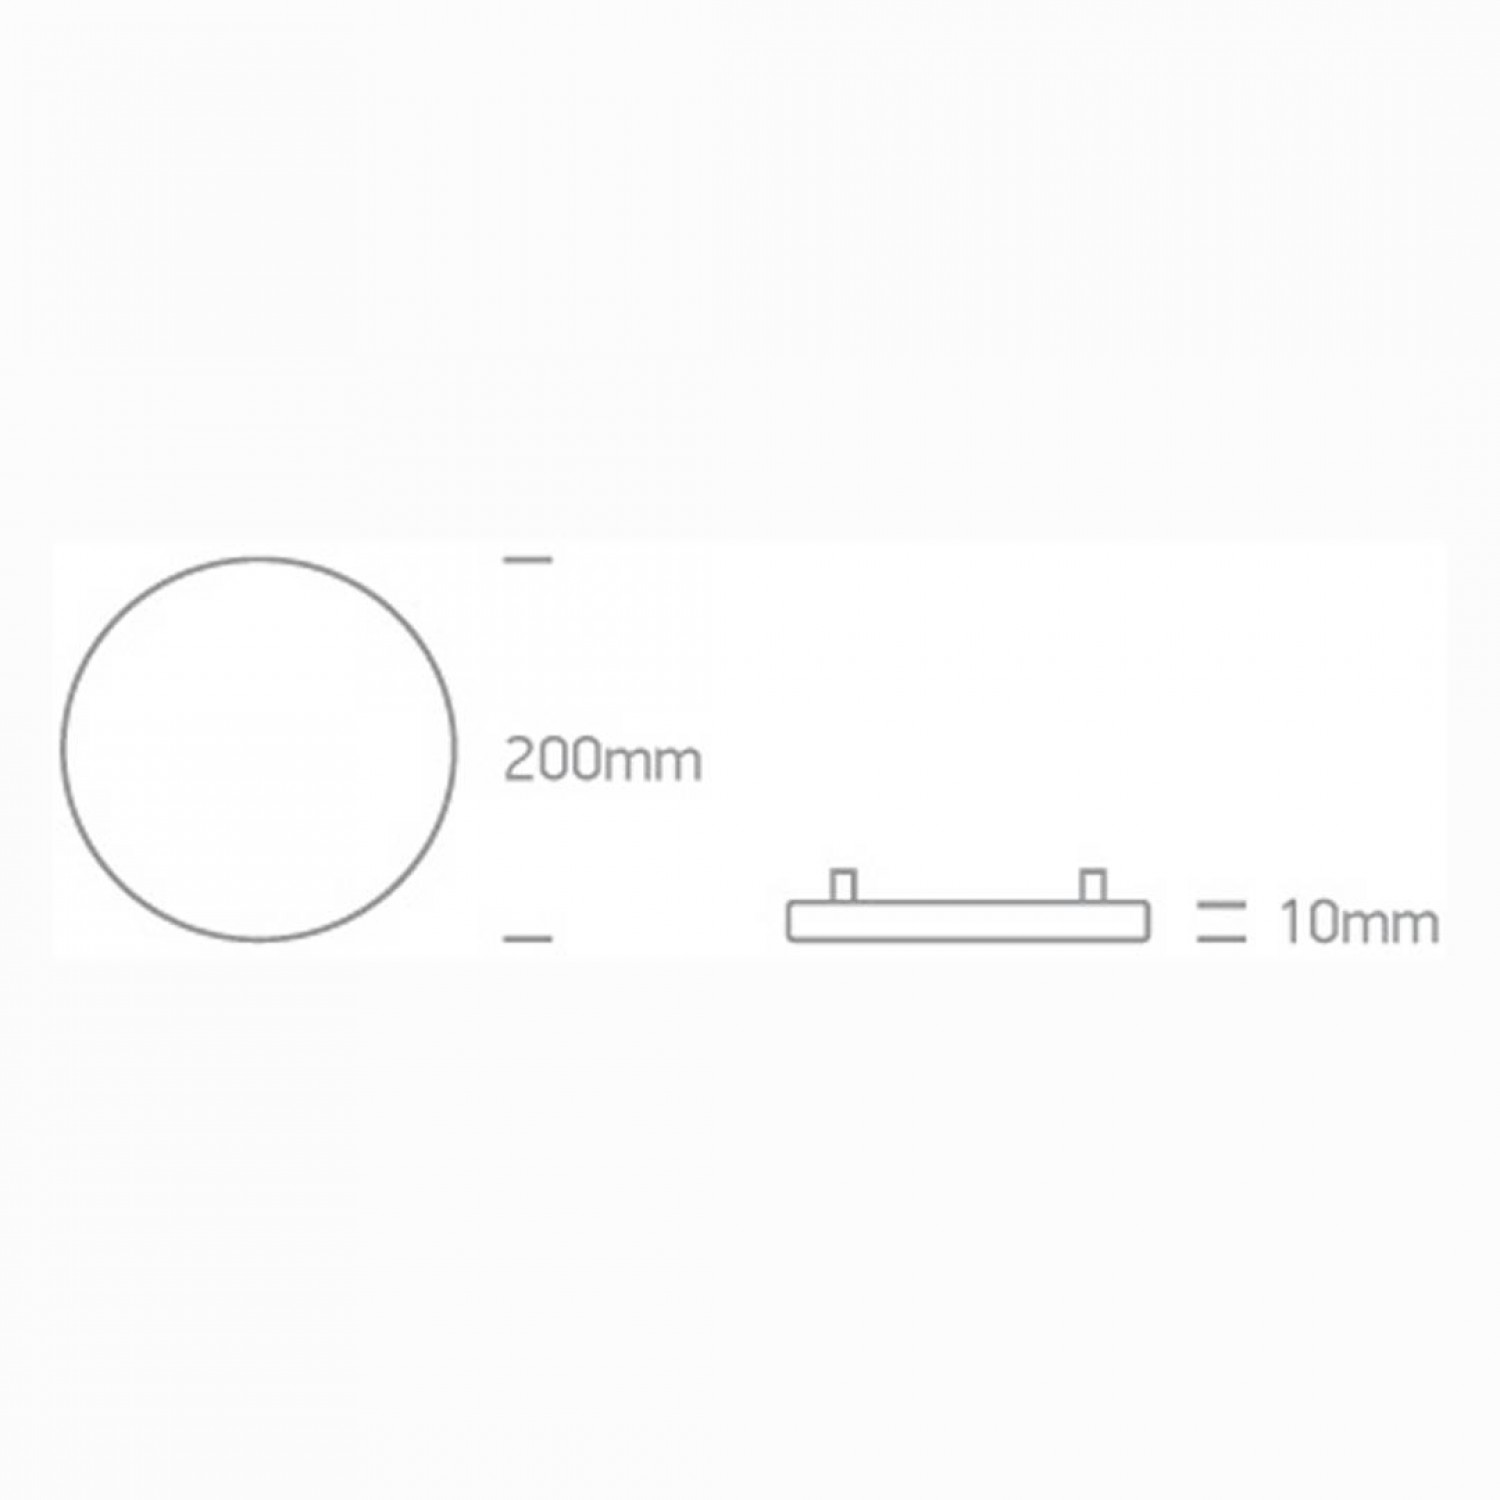 Точечный светильник ONE Light Floating Panels Range Adjustable Cut Out Hole 10120CE/W